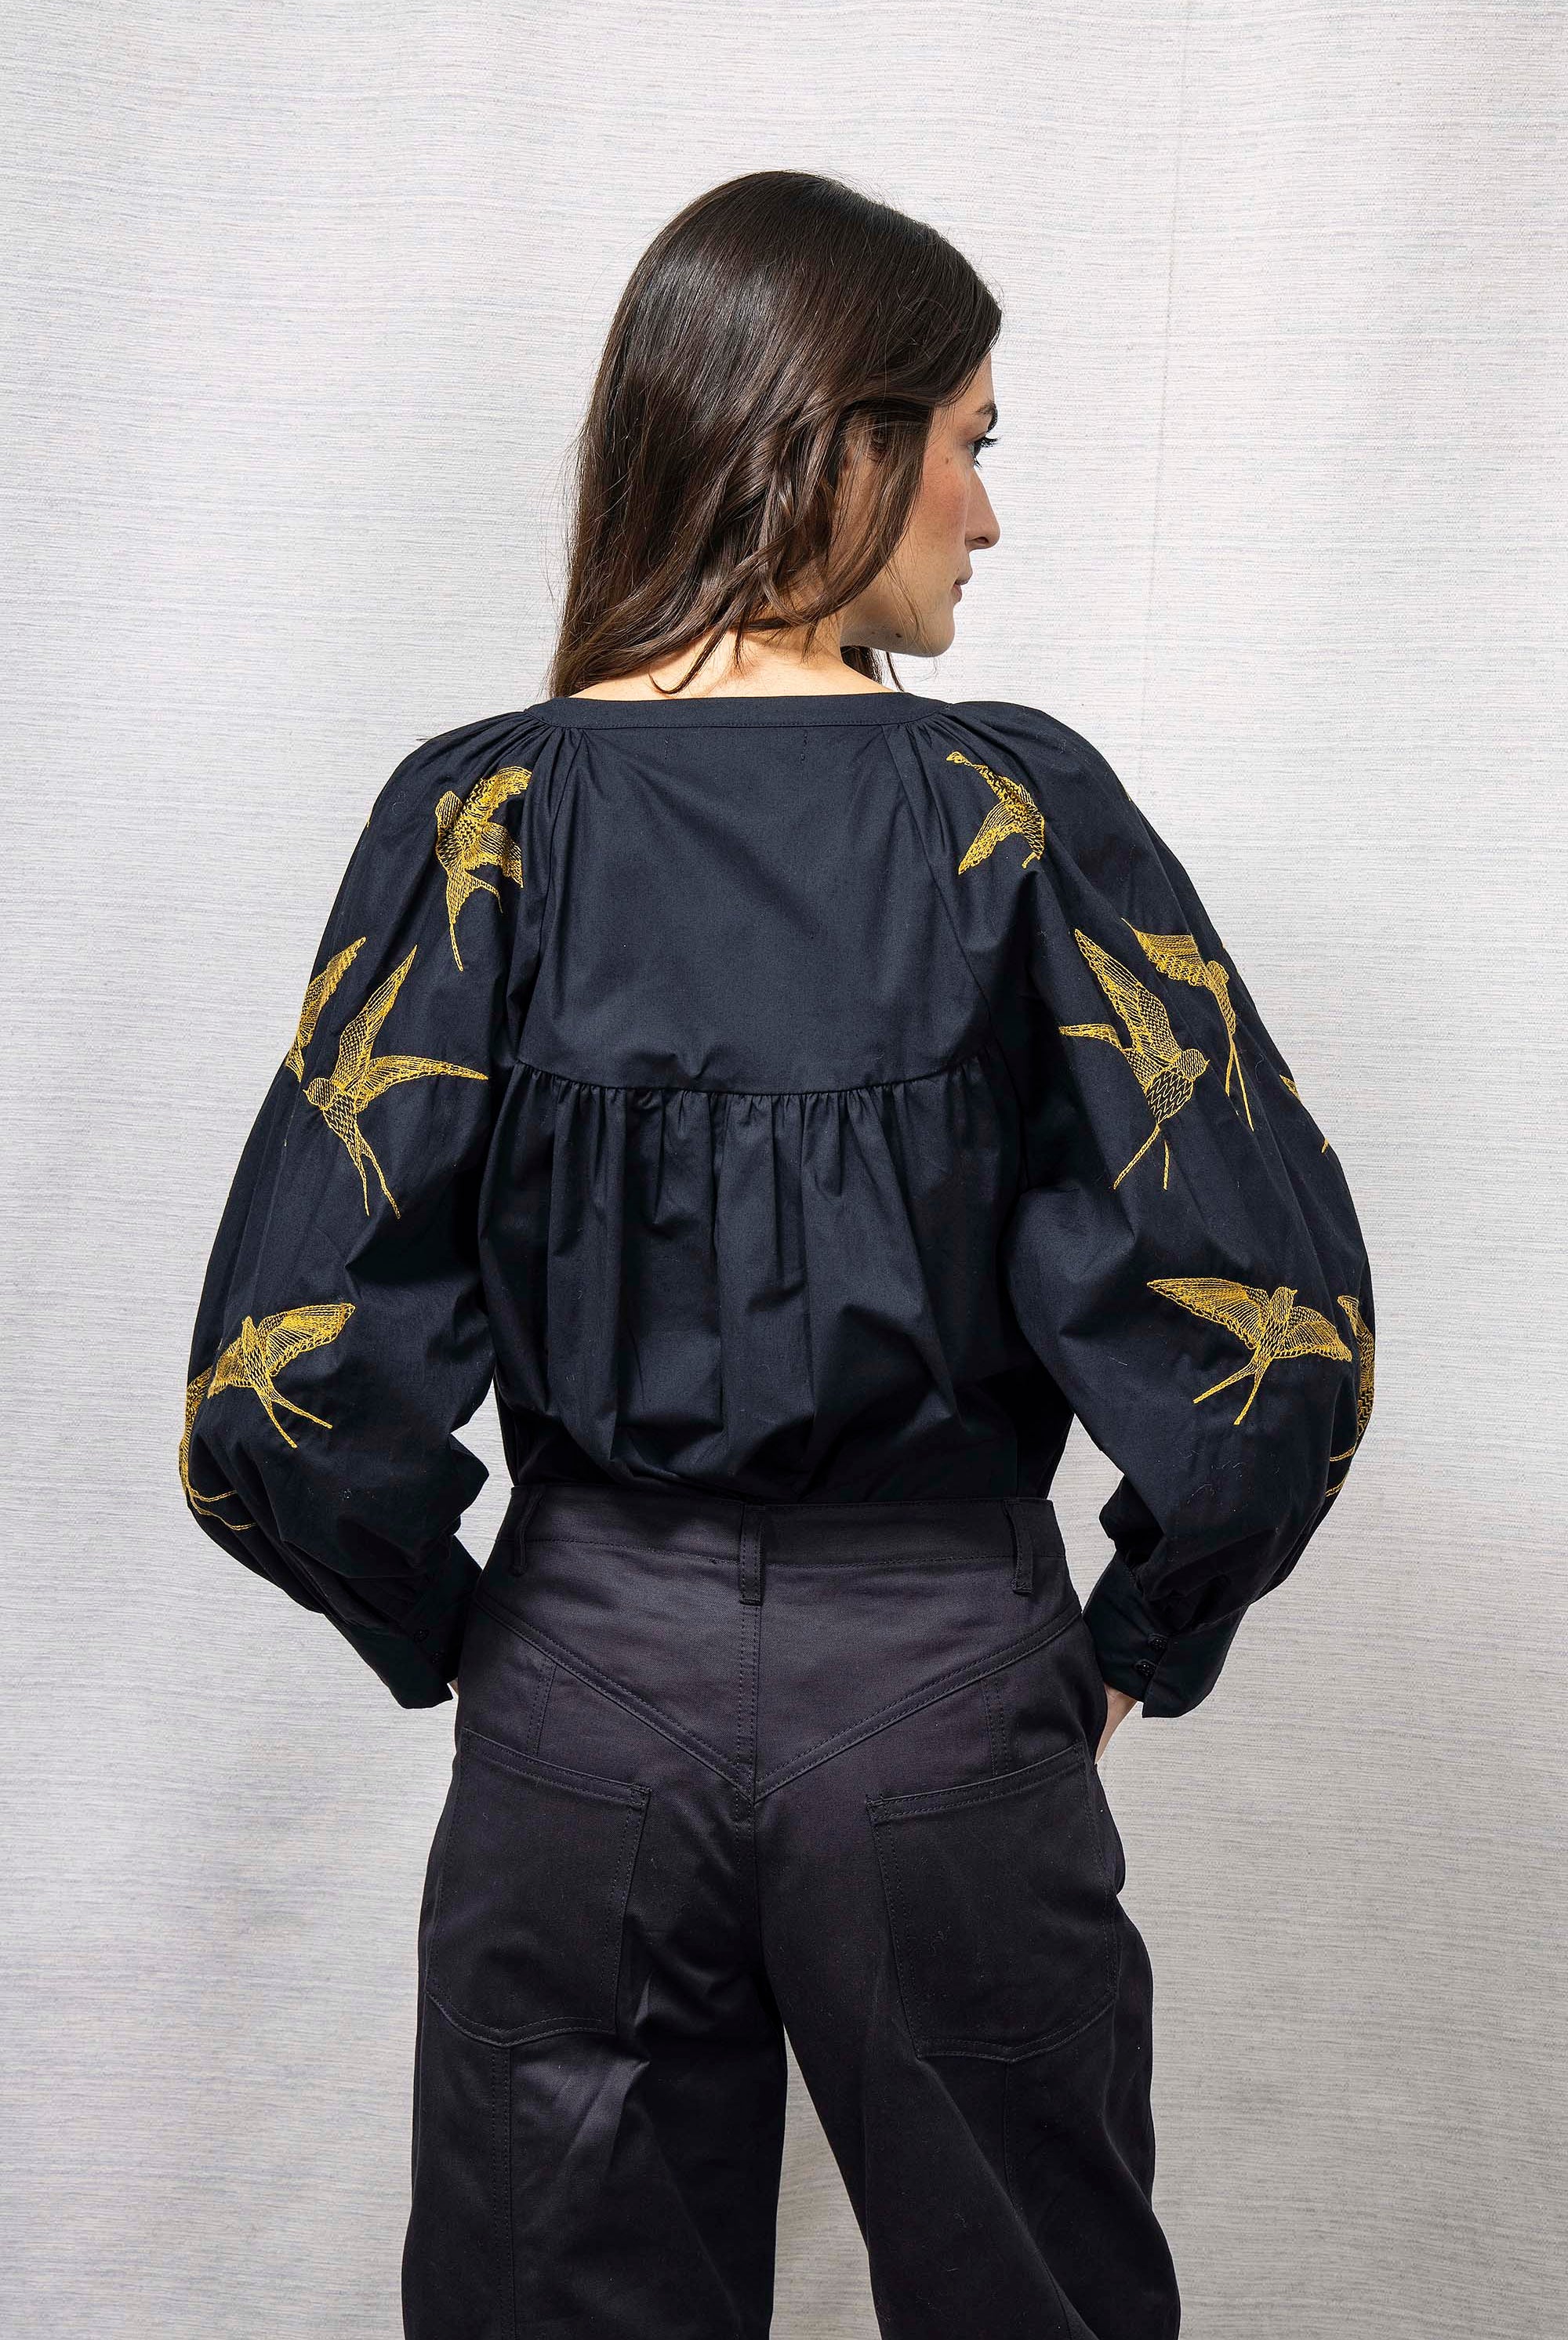 Chemise Doria Aves Noir chemise femme, grand incontournable du vestiaire féminin